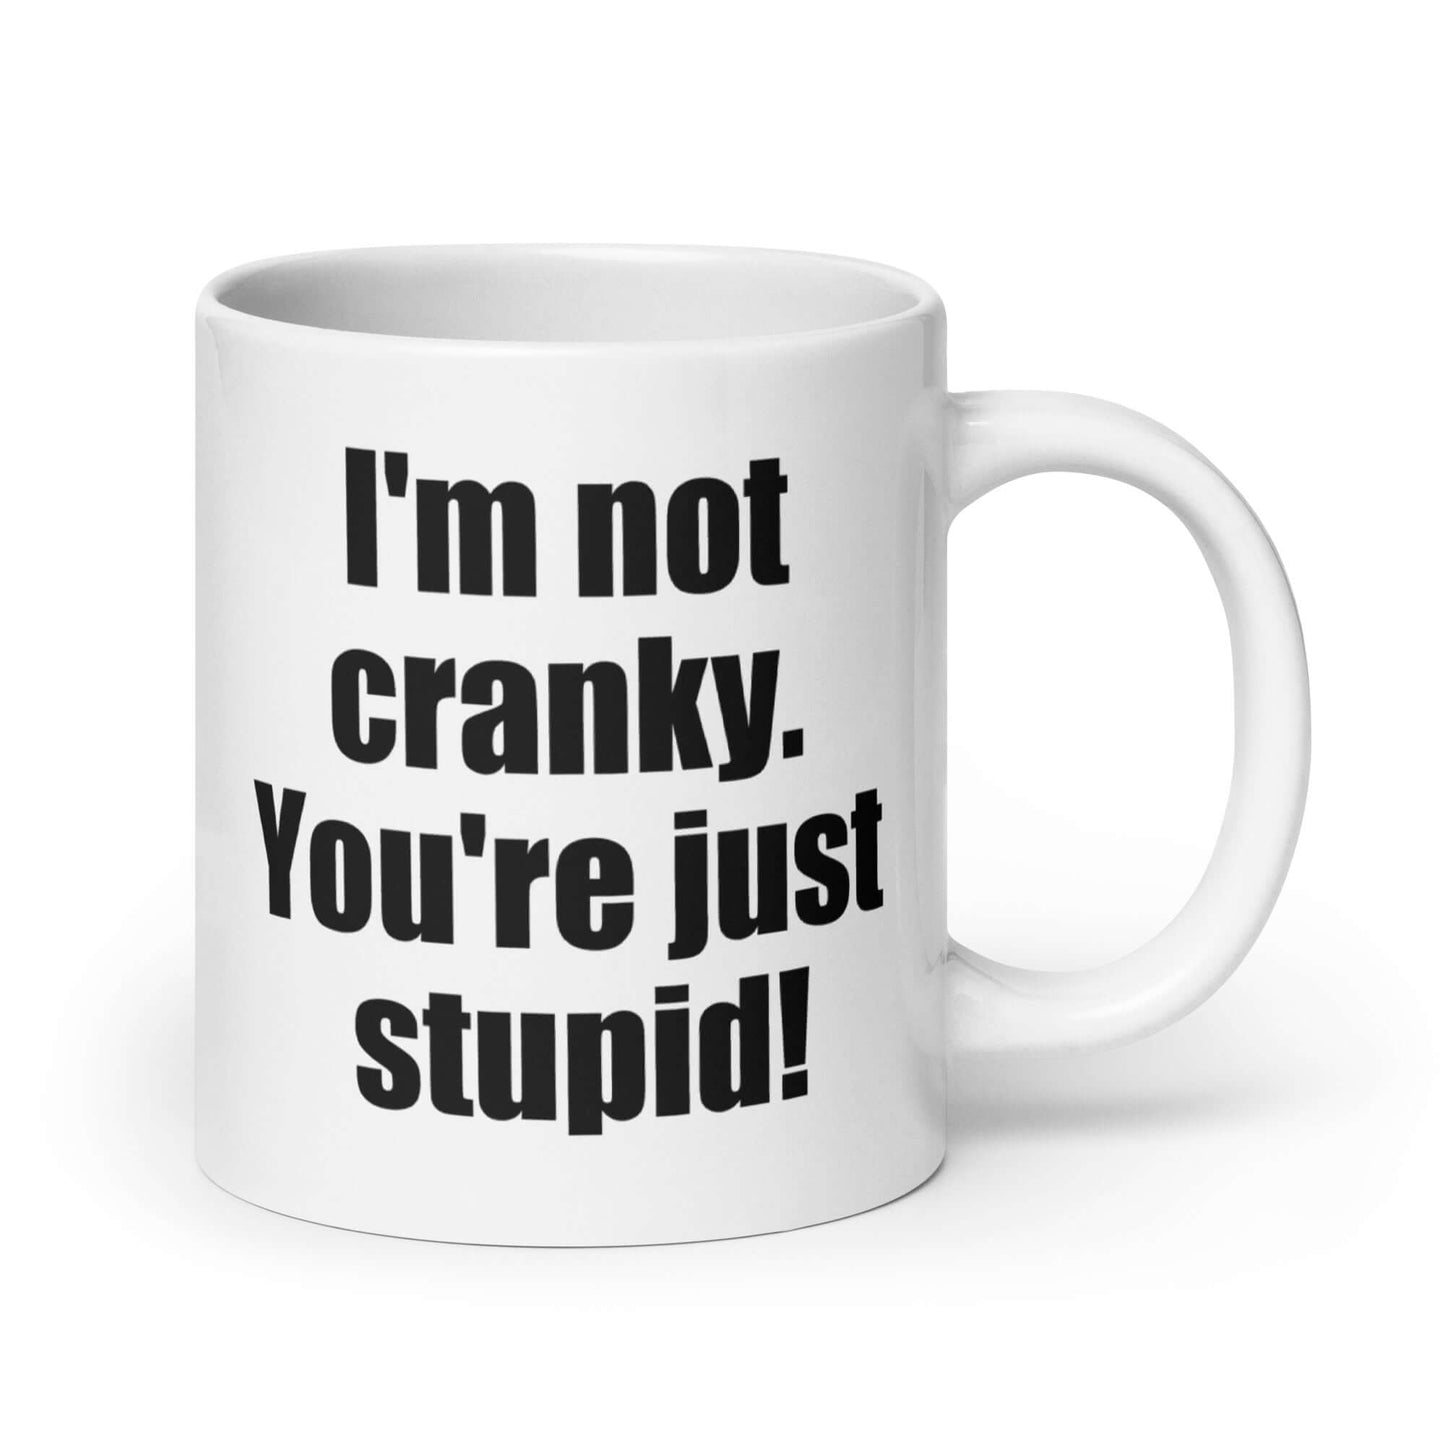 I'm not cranky you're just stupid funny sarcastic mug